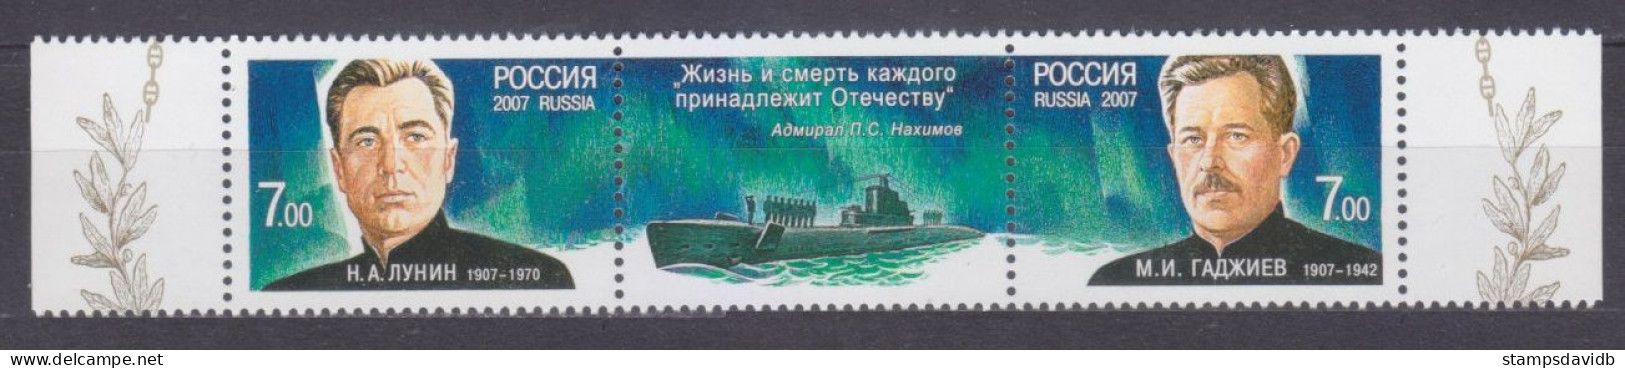 2007 Russia 1419-1420strip Submariner Heroes N. A. Lunin M. I. Gadzhiev 4,00 € - Submarines